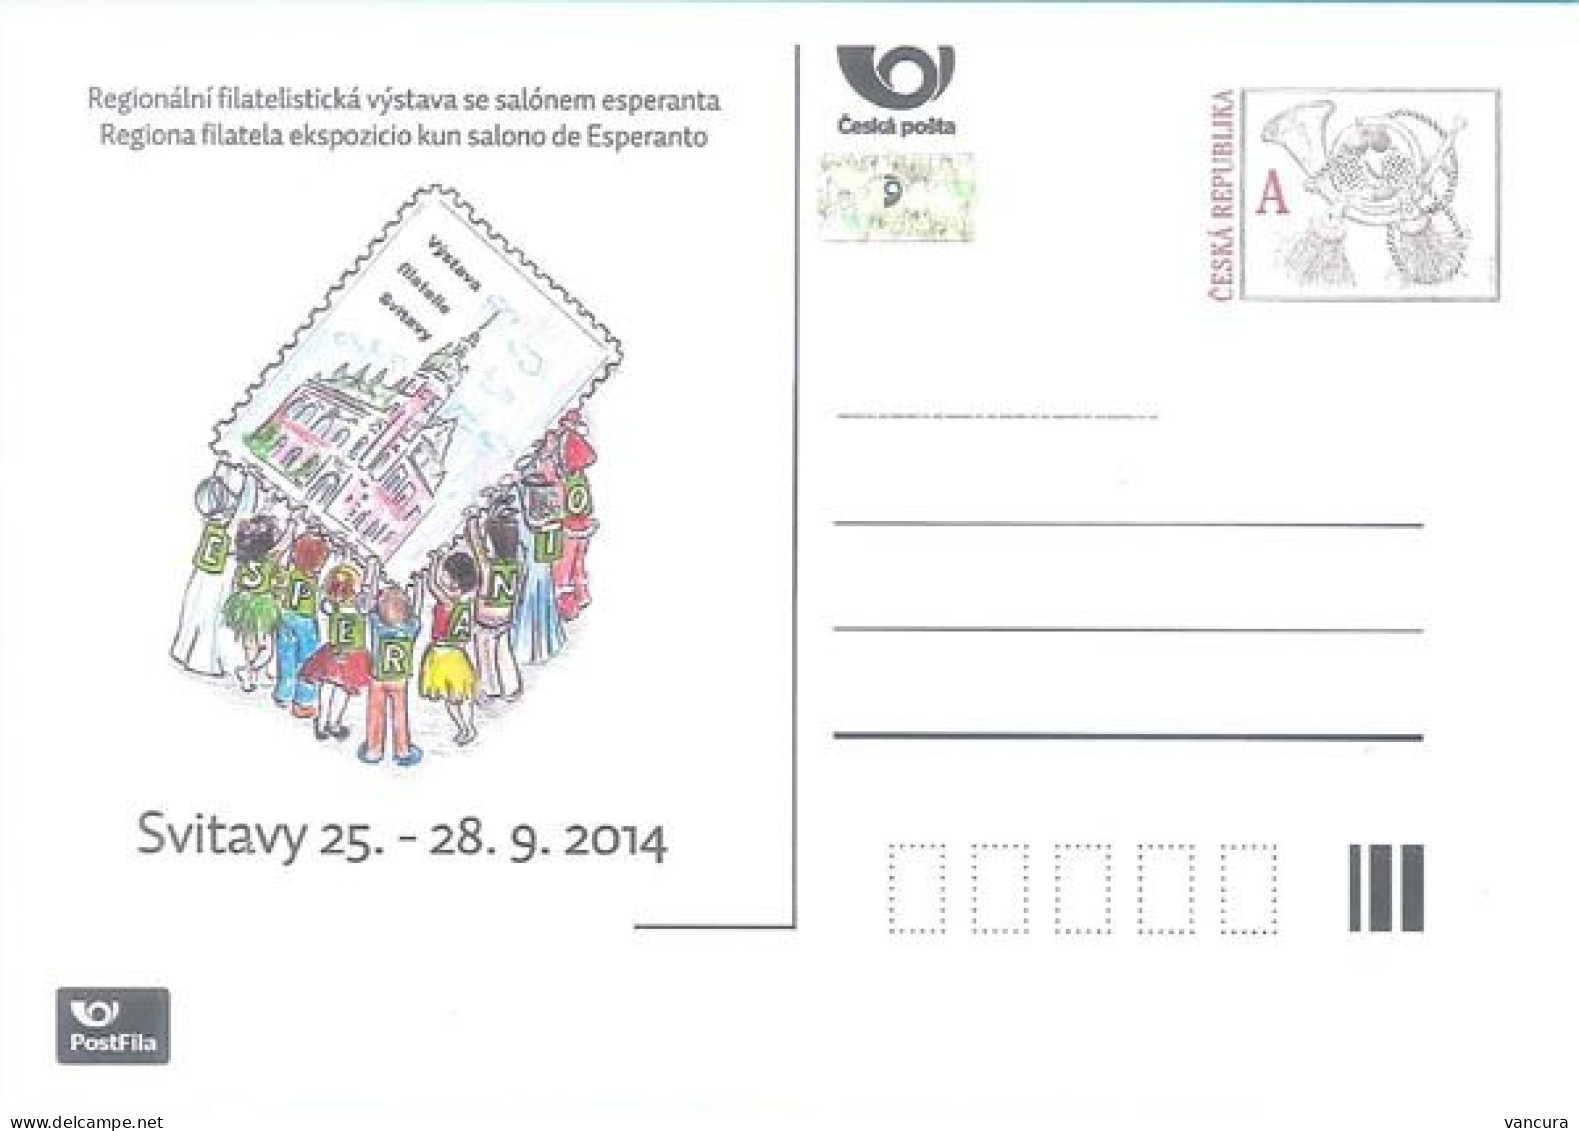 CDV A 203 Czech Republic Svitavy/Zwittau Stamp Exhibition With Esperanto Saloon 2014 - Postcards